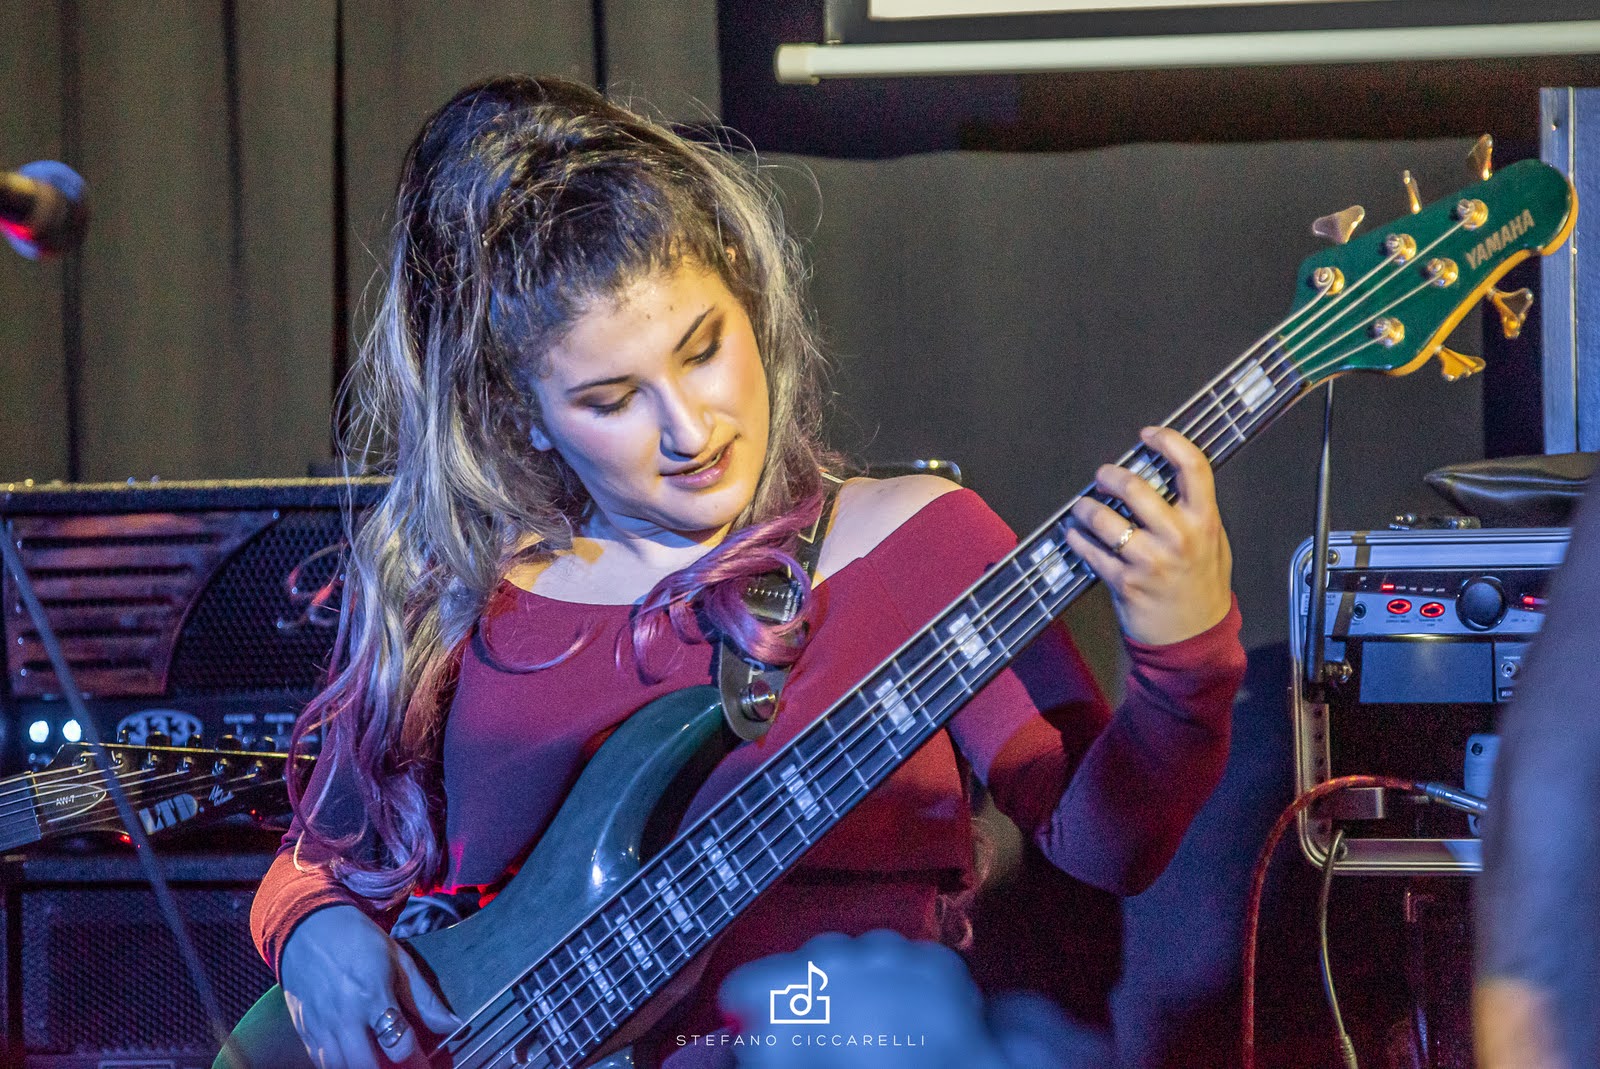 Laura Candela (Dark Queen) - Bass Guitarist of the band Falling Giant